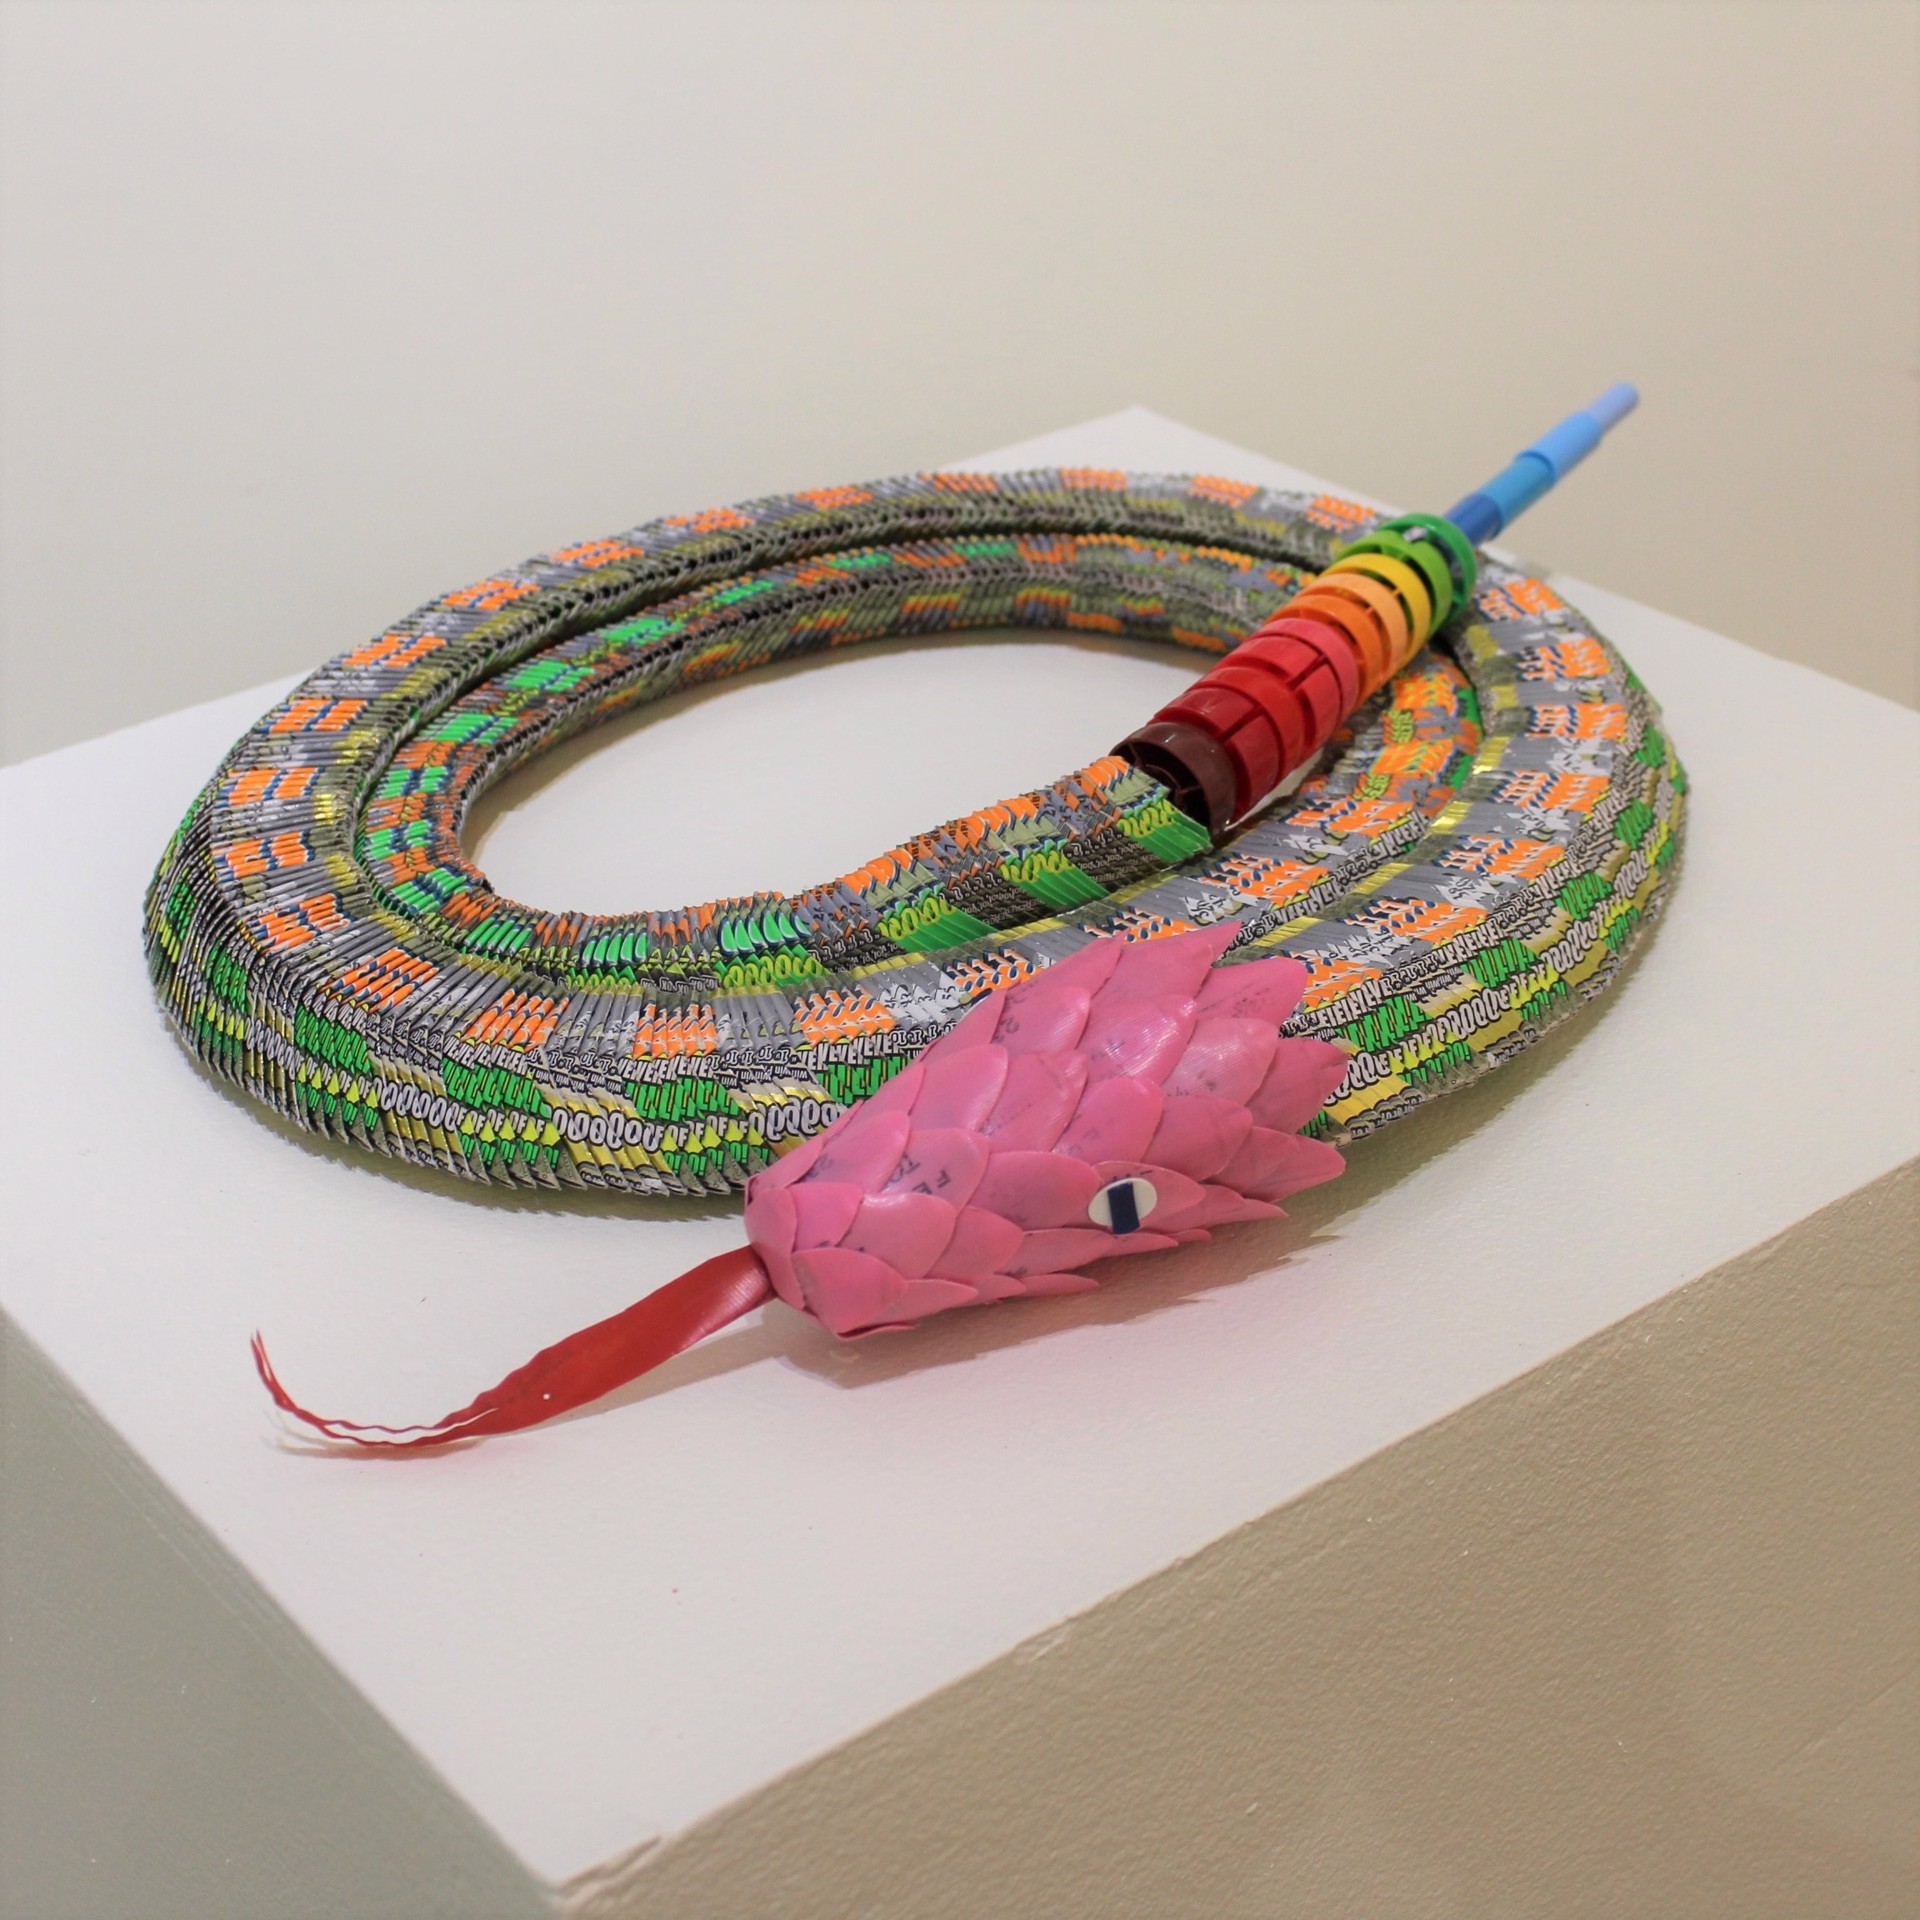 Pink-Headed Snake by Alex Lockwood